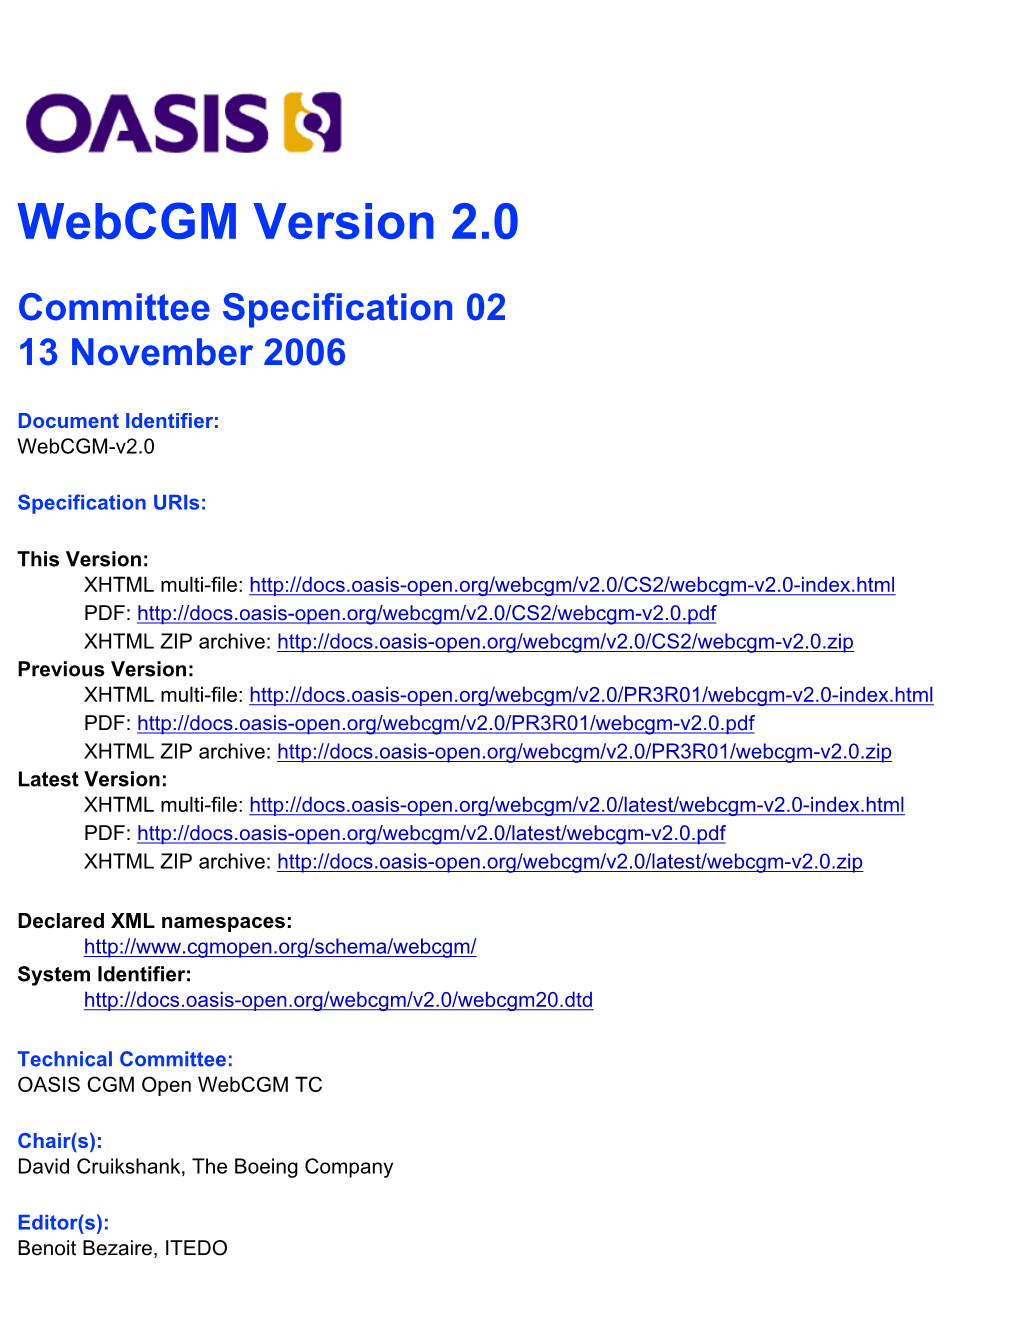 OASIS CGM Open Webcgm V2.0